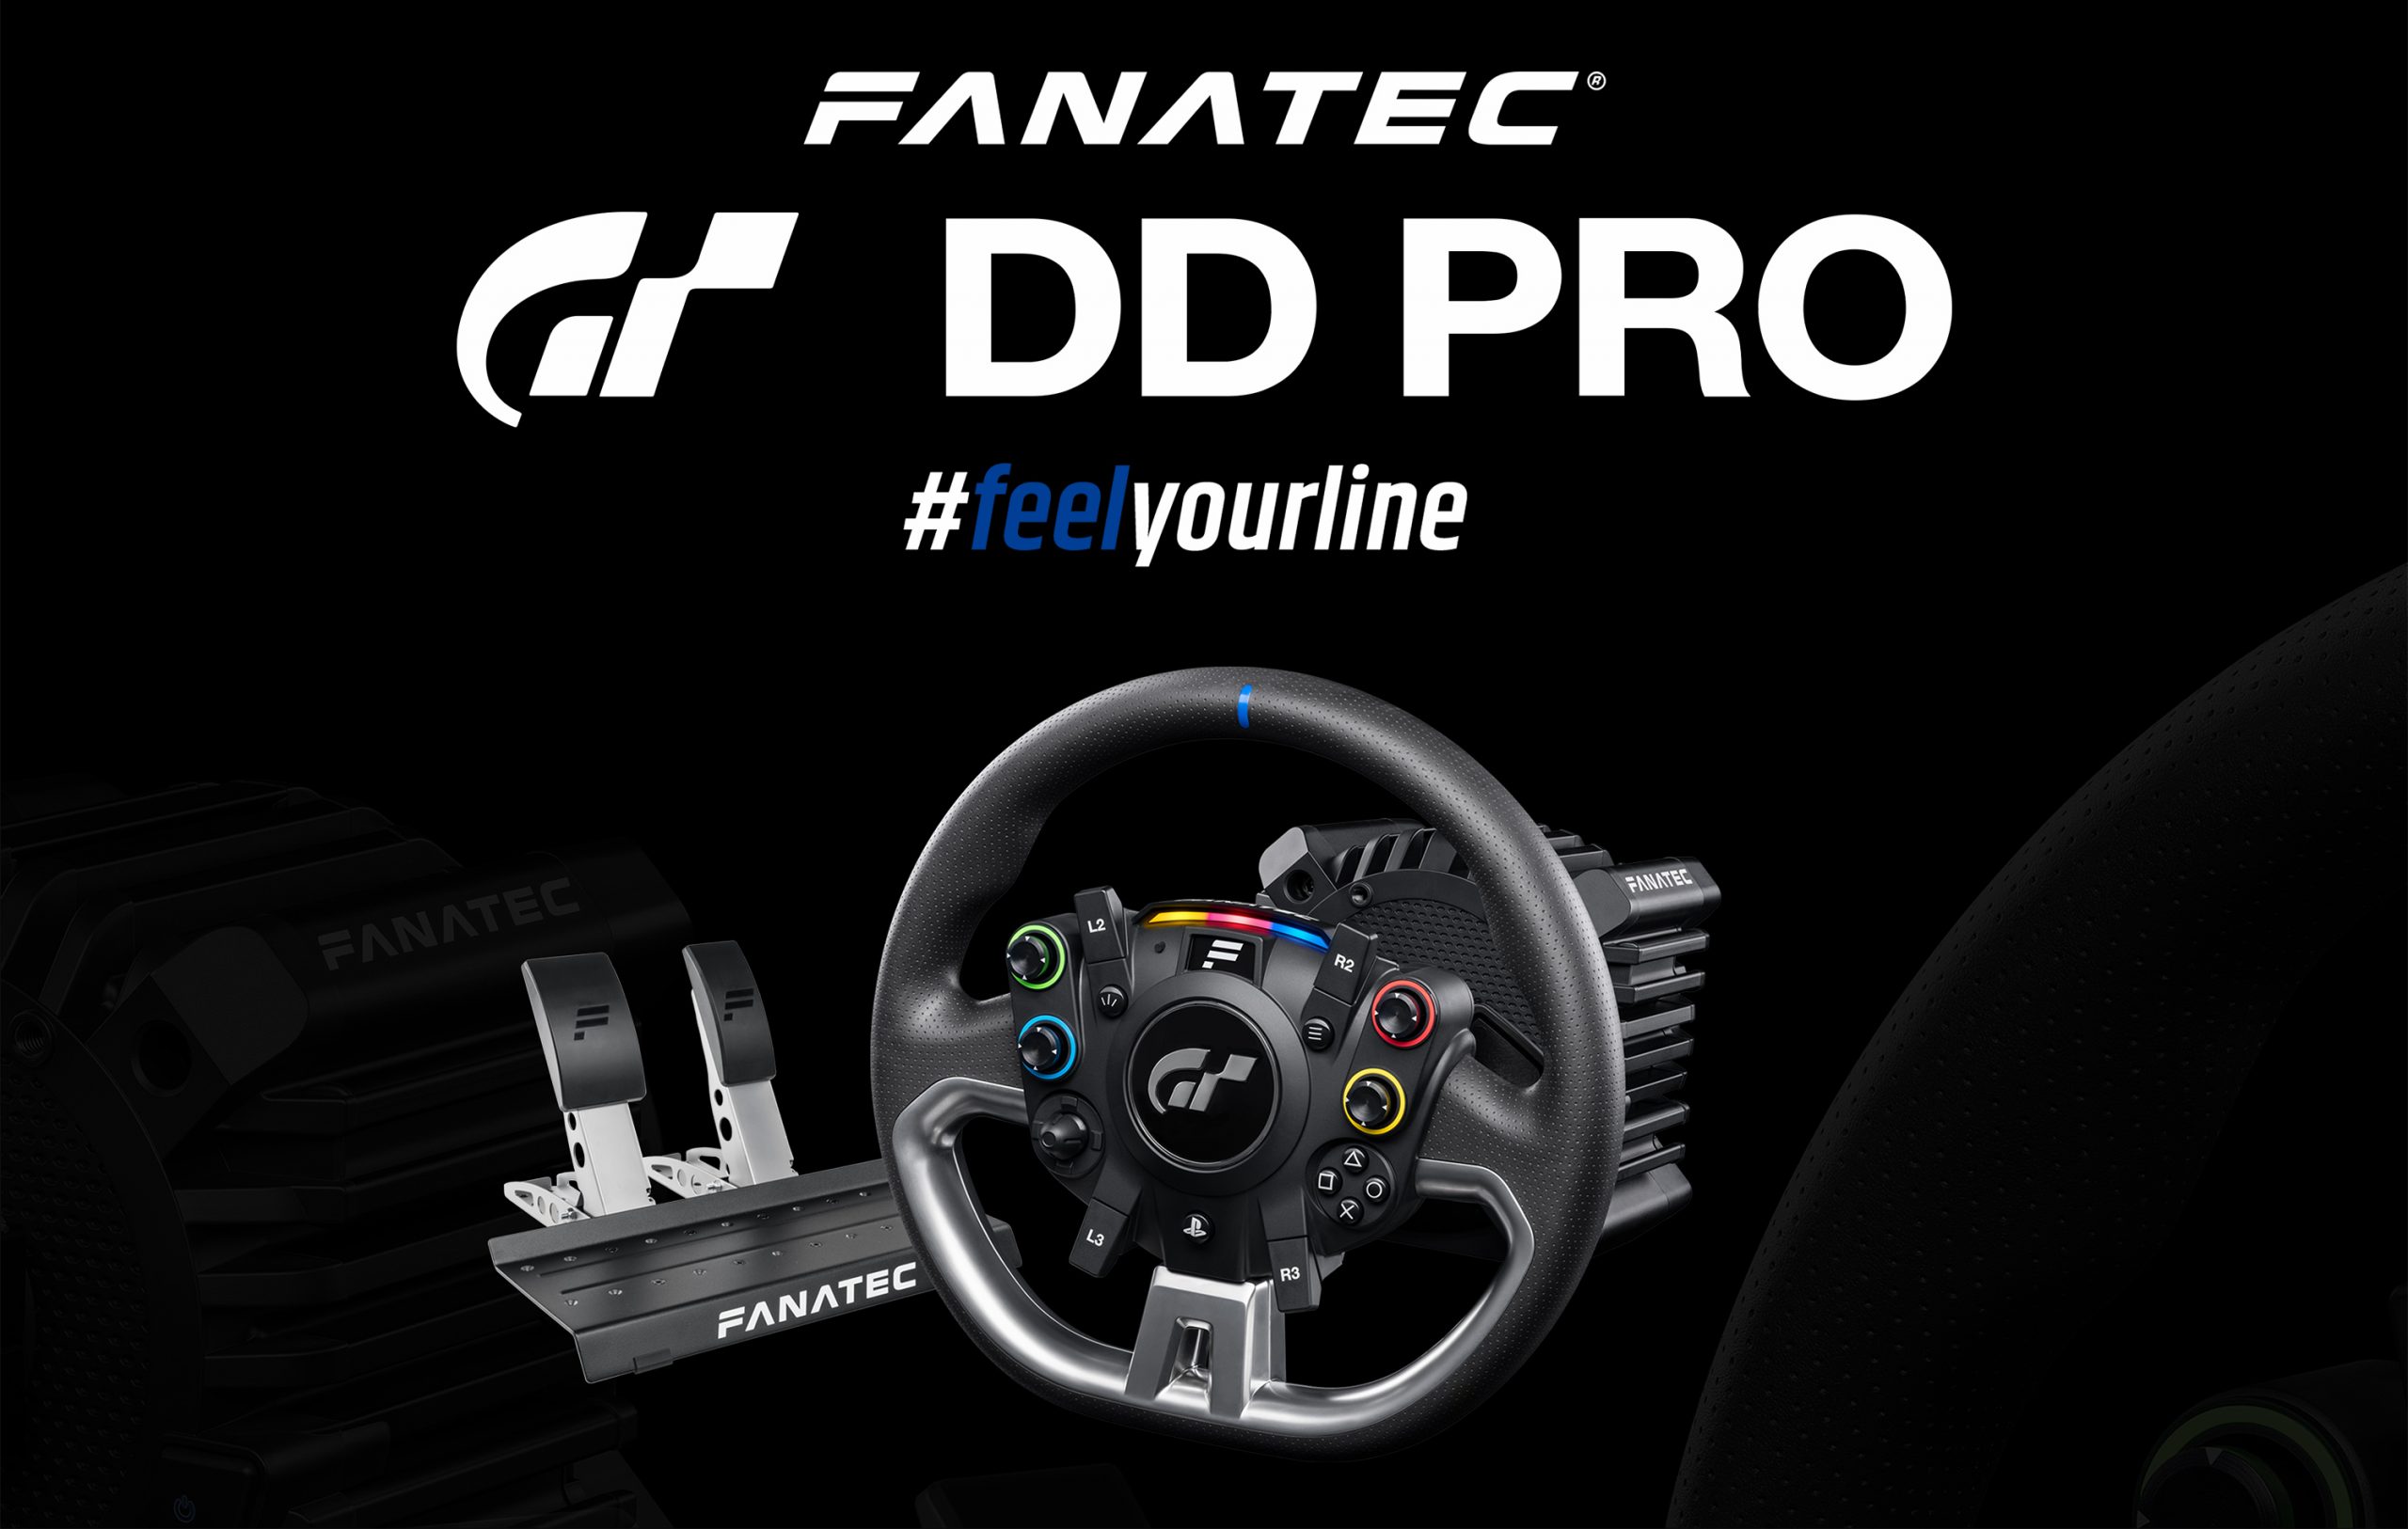 GT DD Pro | Gran Turismo DD Pro